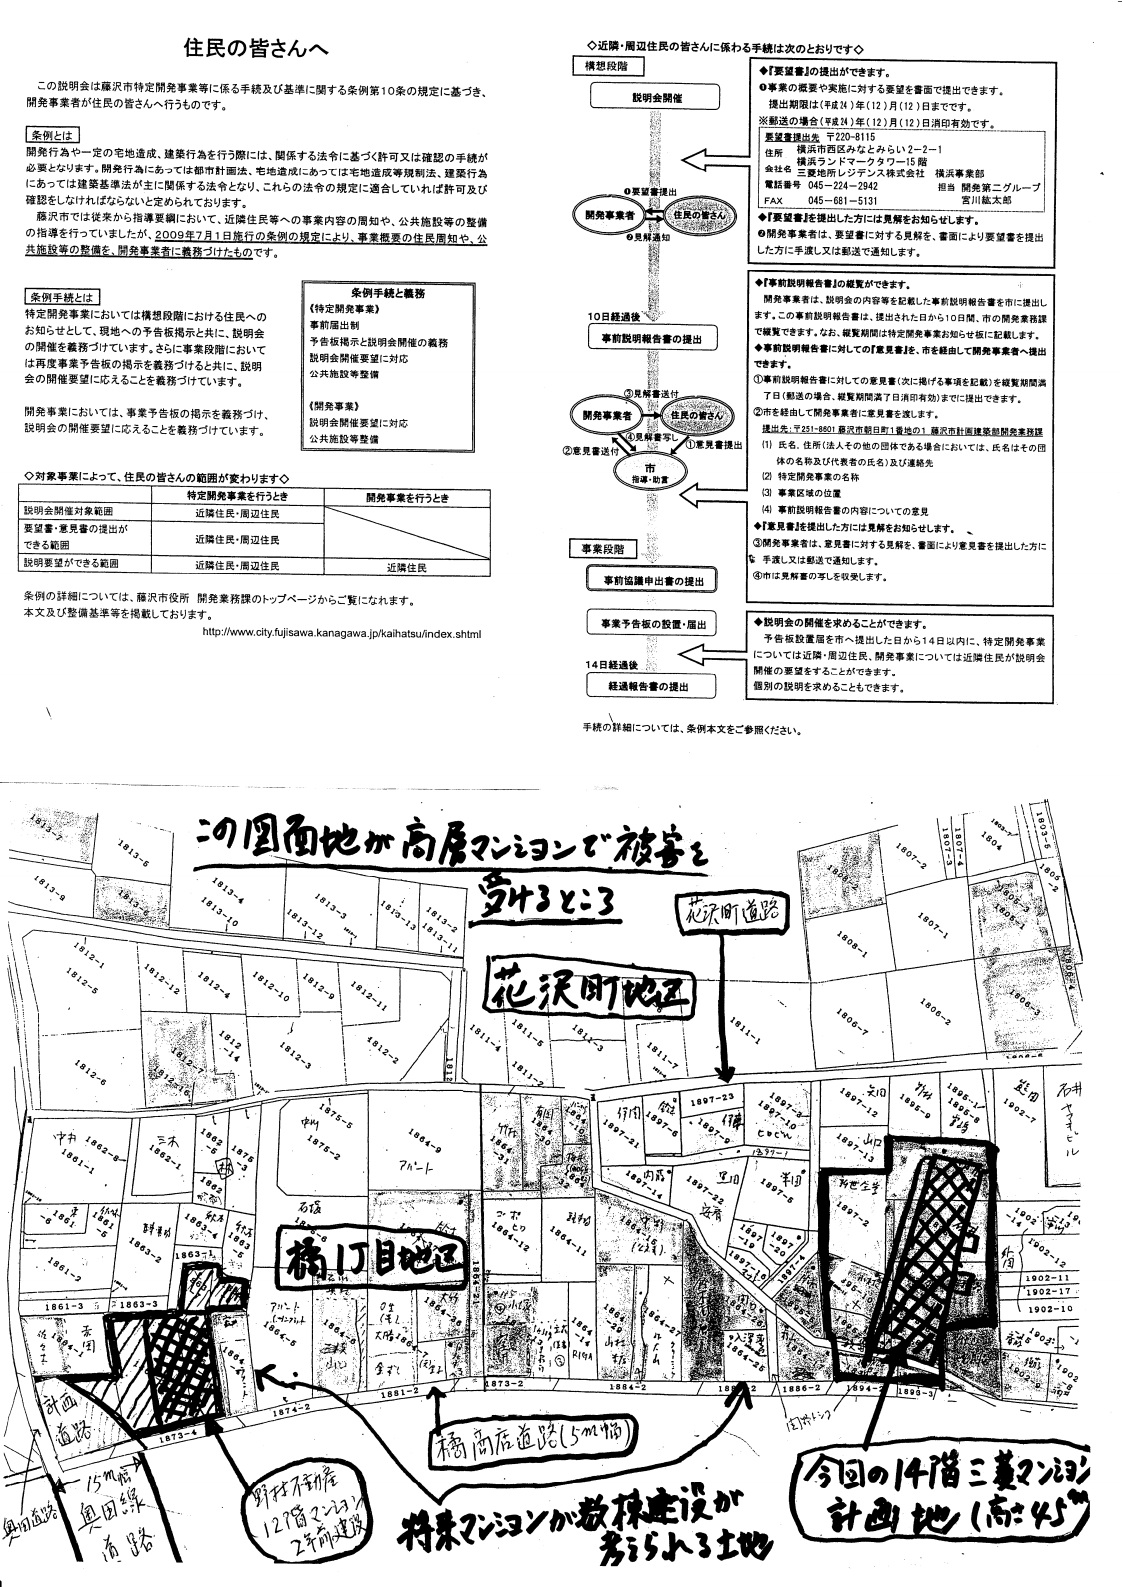 http://fujikama.coolblog.jp/2012/DEC/2012120104.jpg